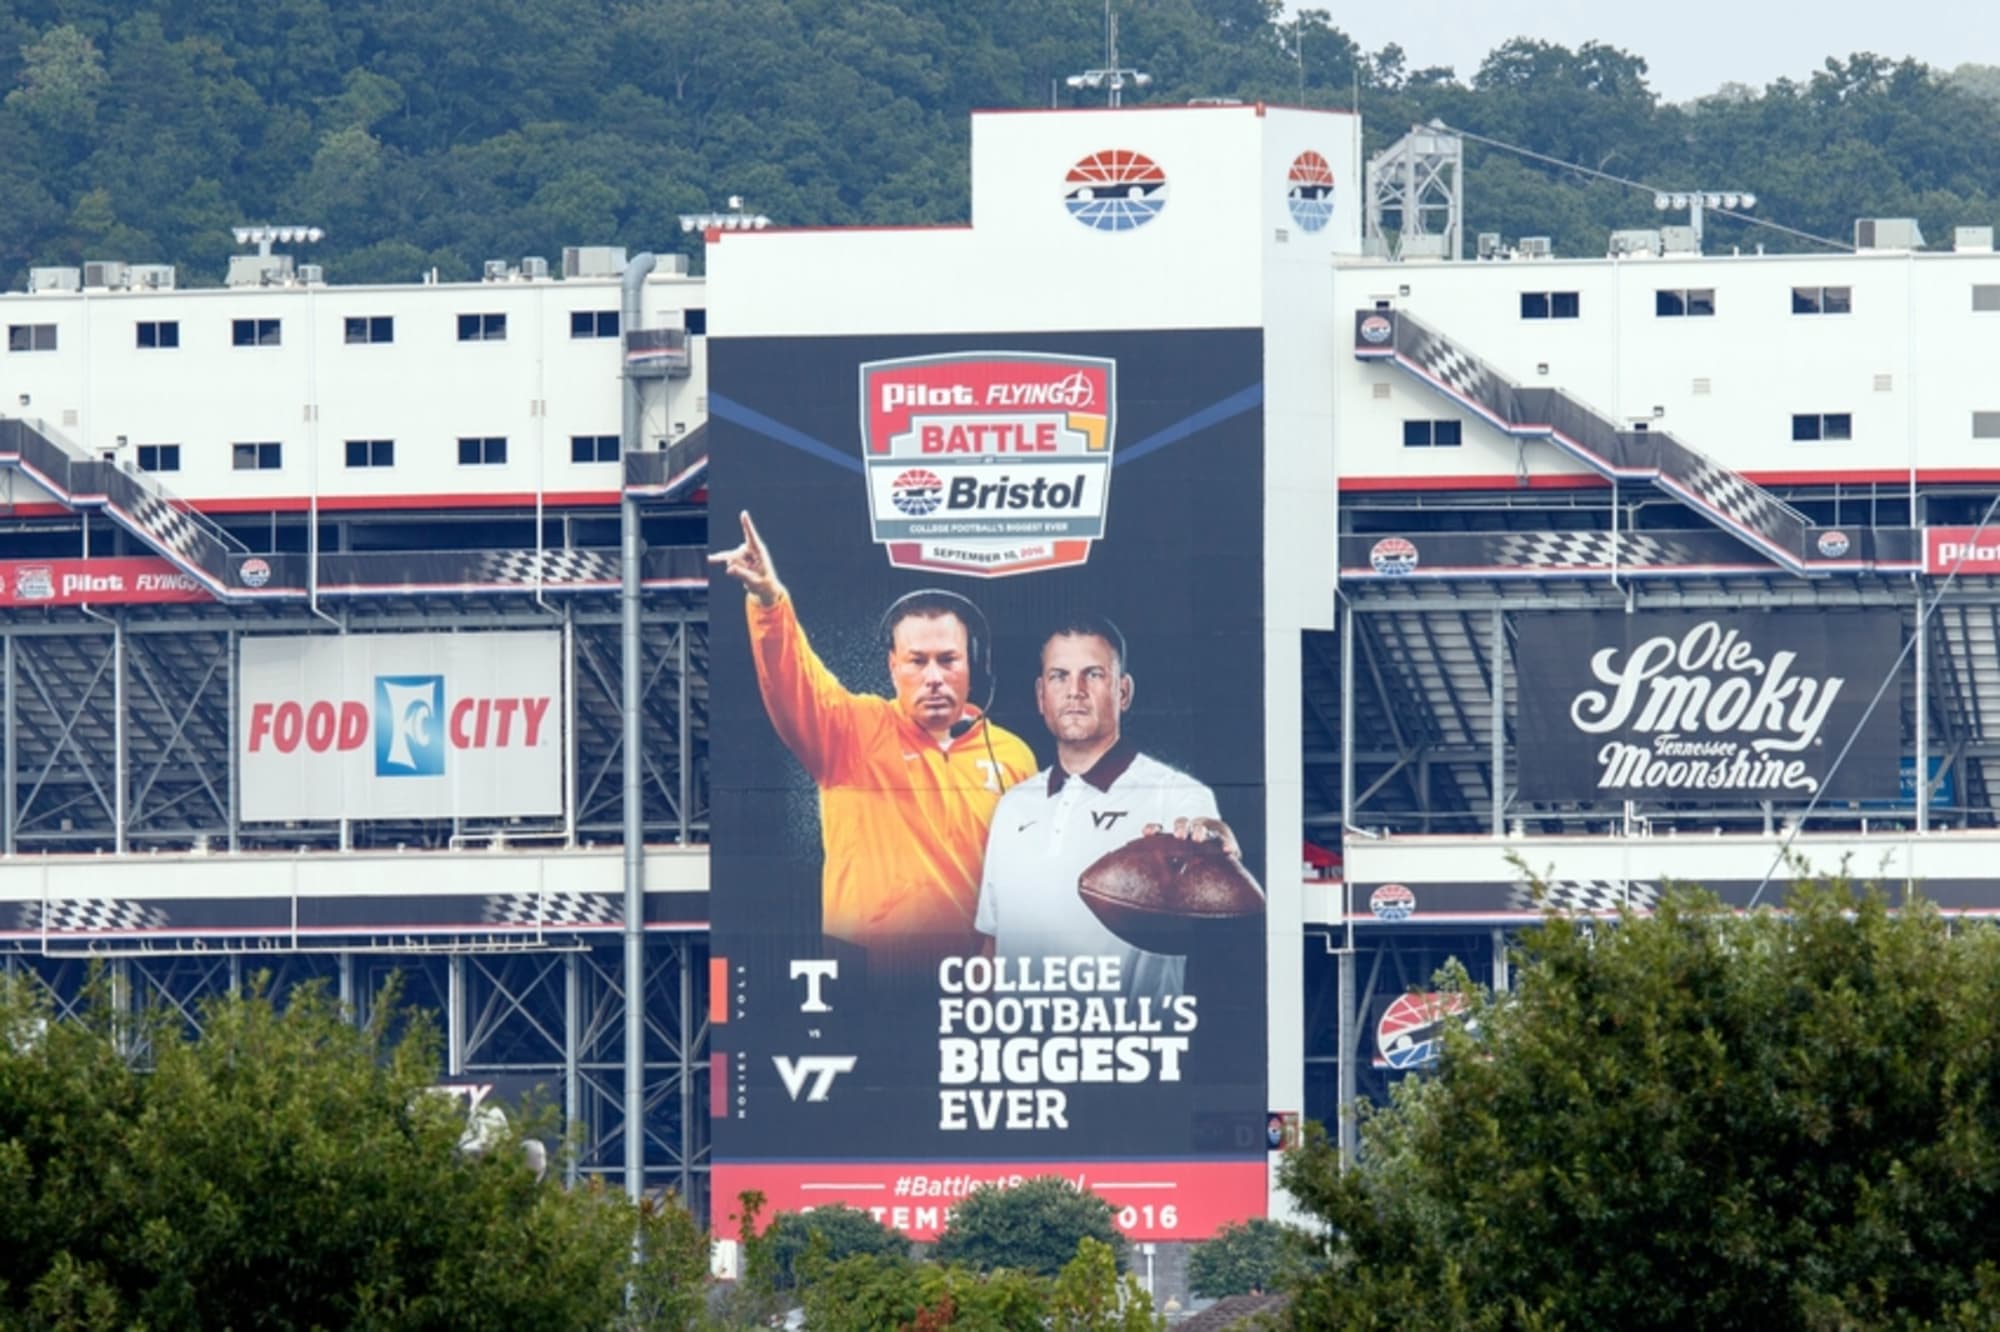 Tennessee vs Virginia Tech Vols Battle at Bristol Preview, Prediction